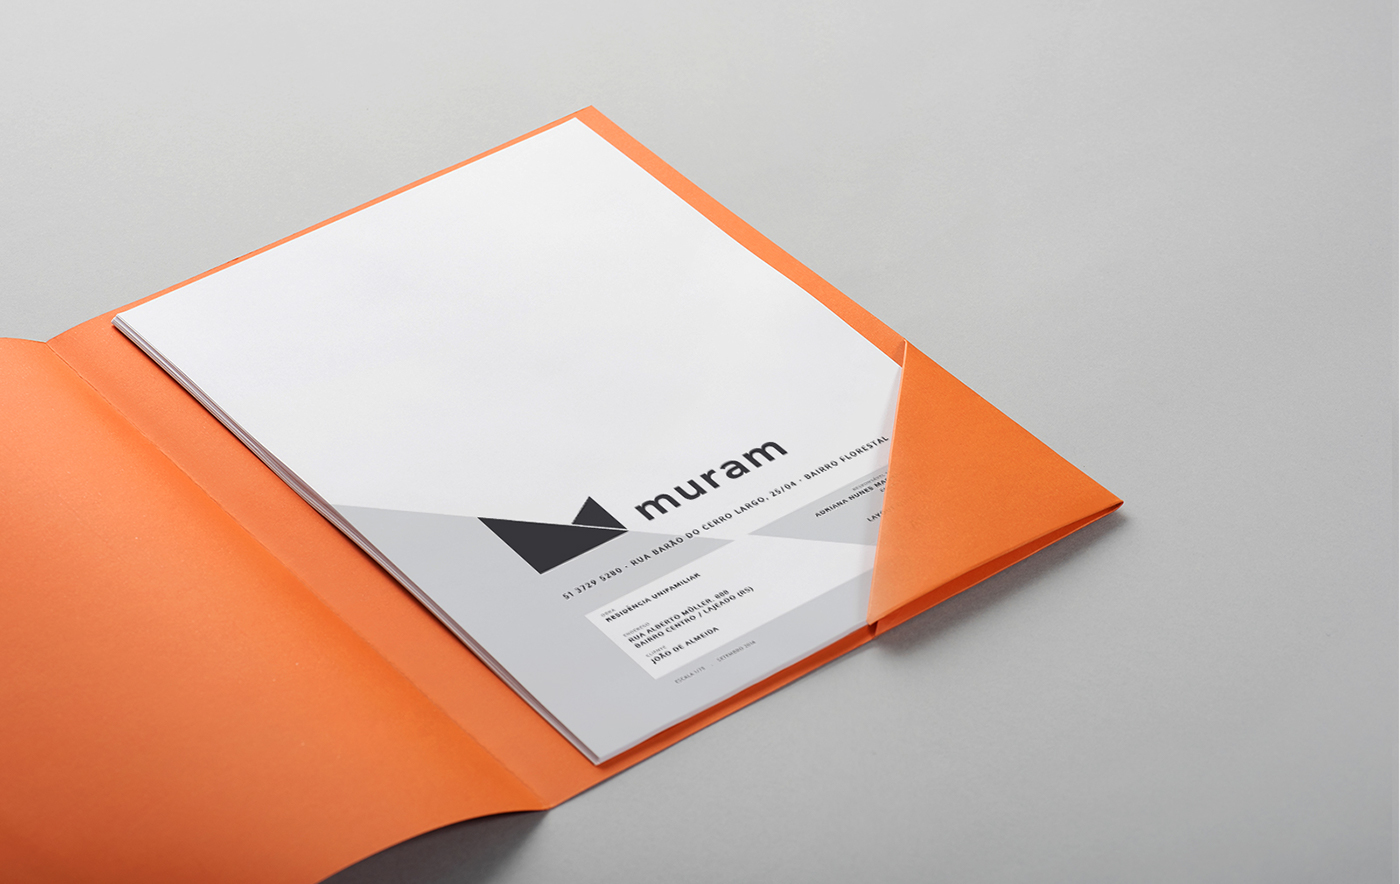 Web Responsive simple minimal origami  fold Stationery muram   orange craft